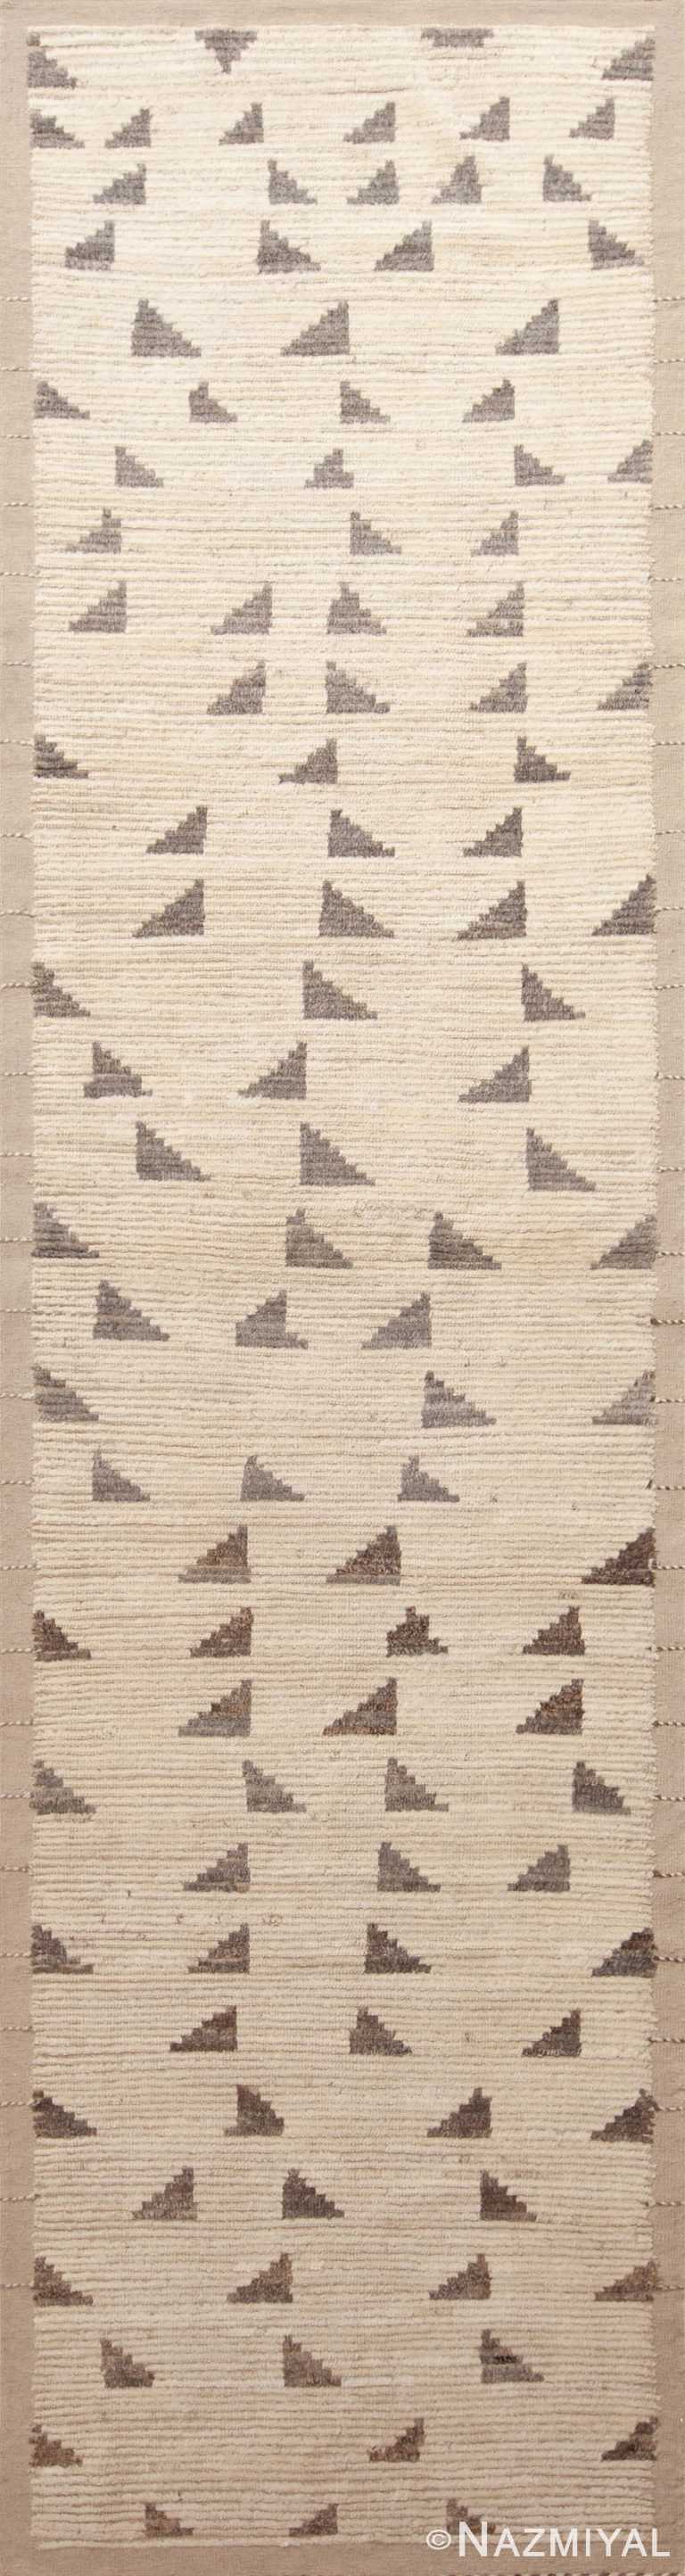 Cream Geometric Grey Triangle Pattern Modern Hallway Runner Rug 11146 by Nazmiyal Antique rugs